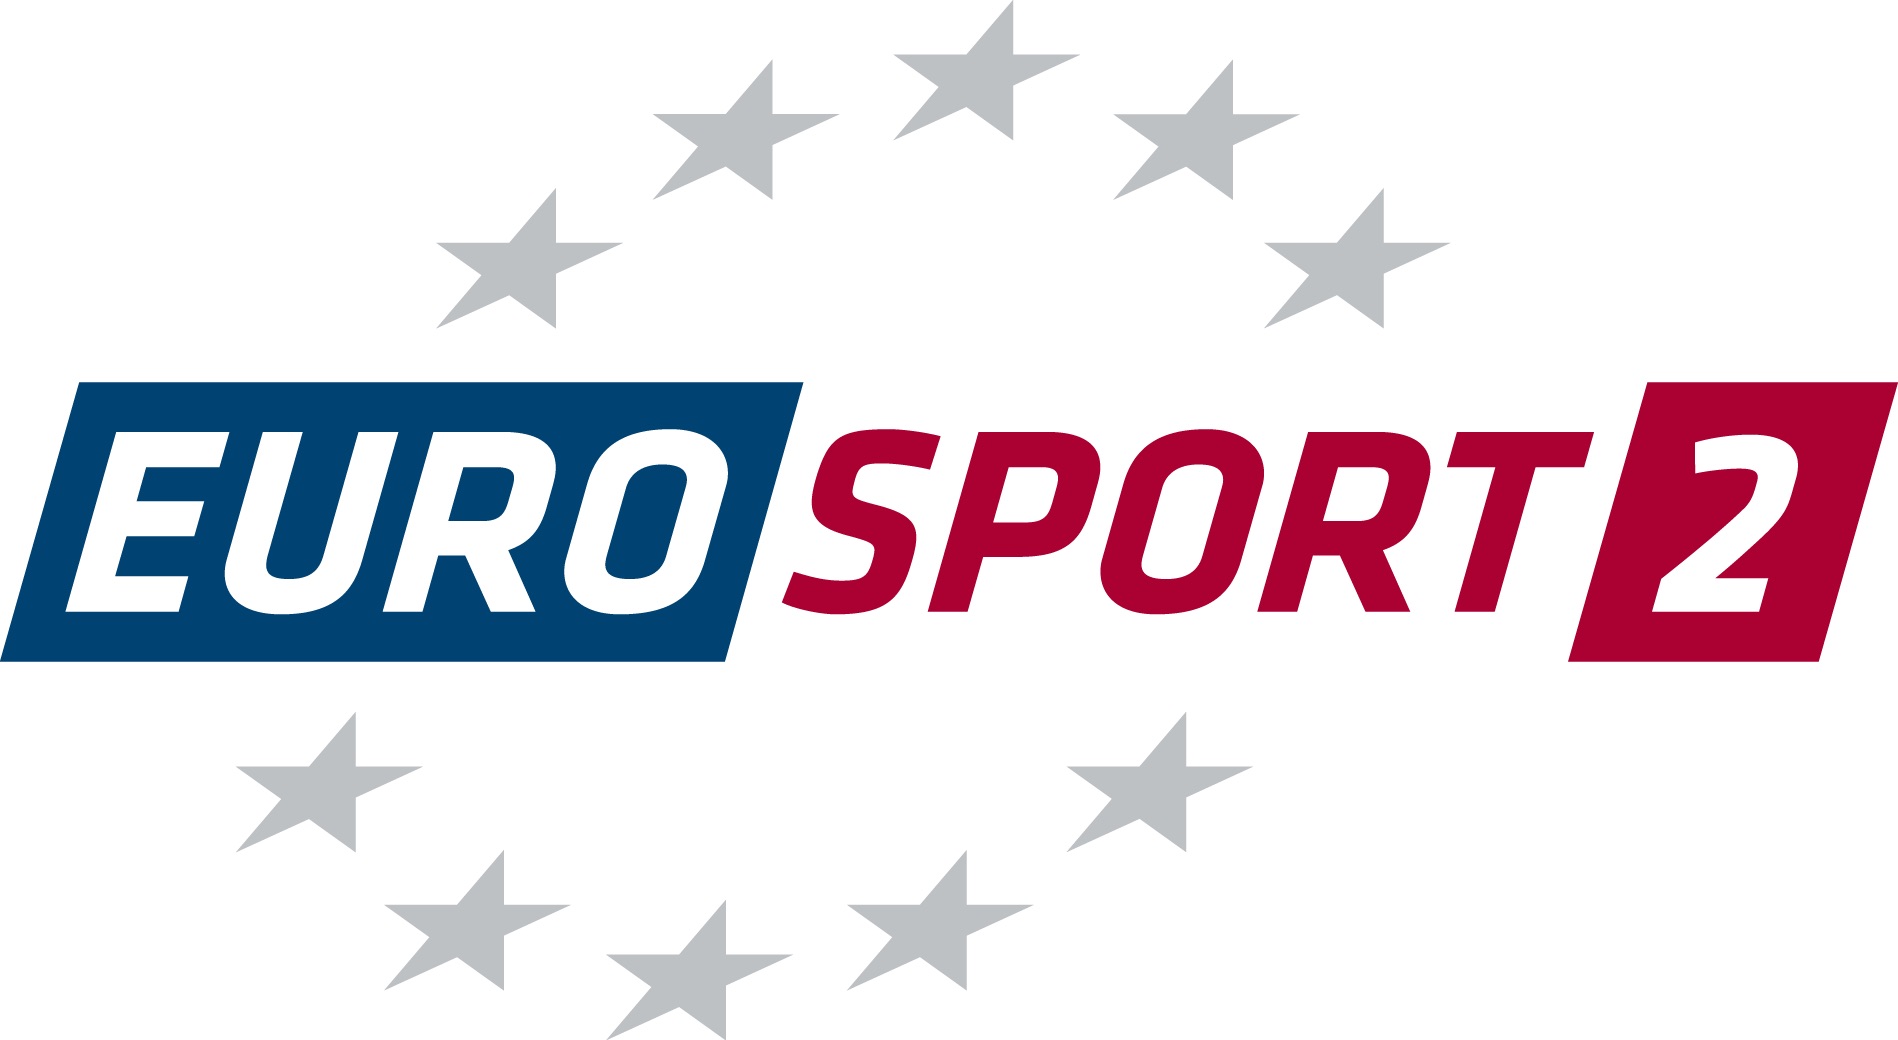 Eurosport 2 will broadcast the historic Europe vs Japan Baseball Series ©Eurosport 2